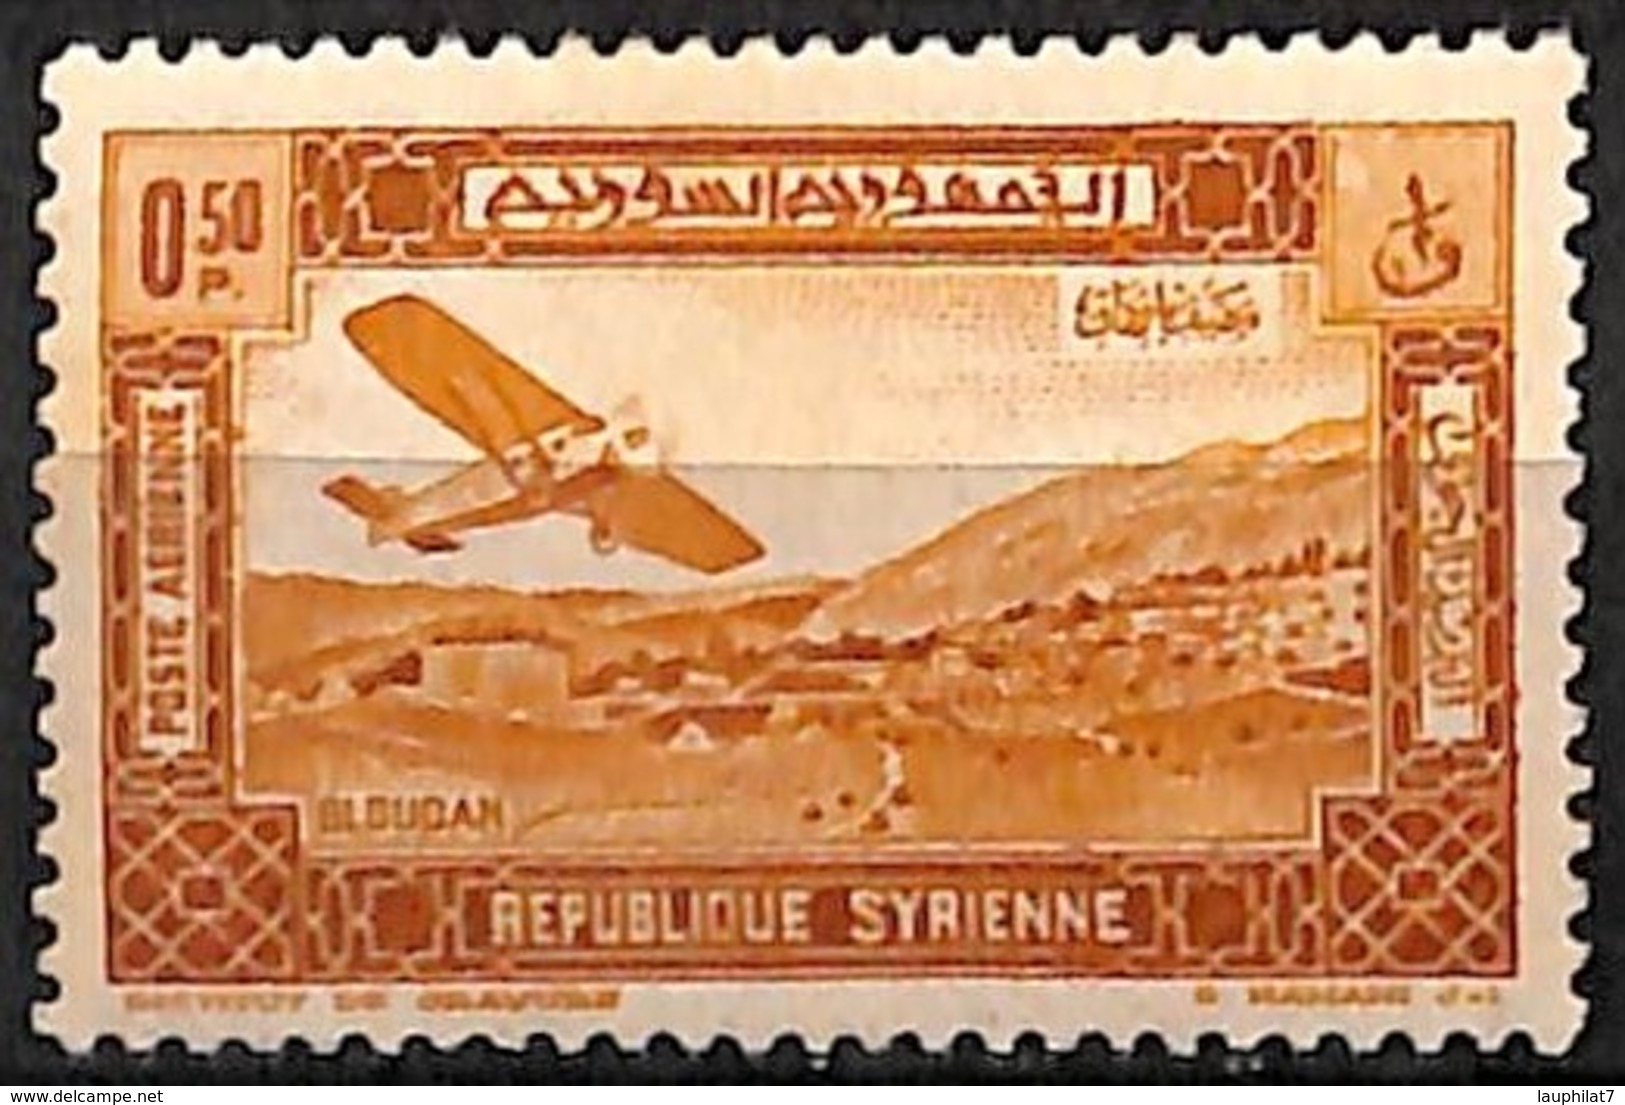 [828226]Syrie 1934 - PA60, 0pi50 Jaune-brun, Rousseur, Colonies, Avion - Luftpost